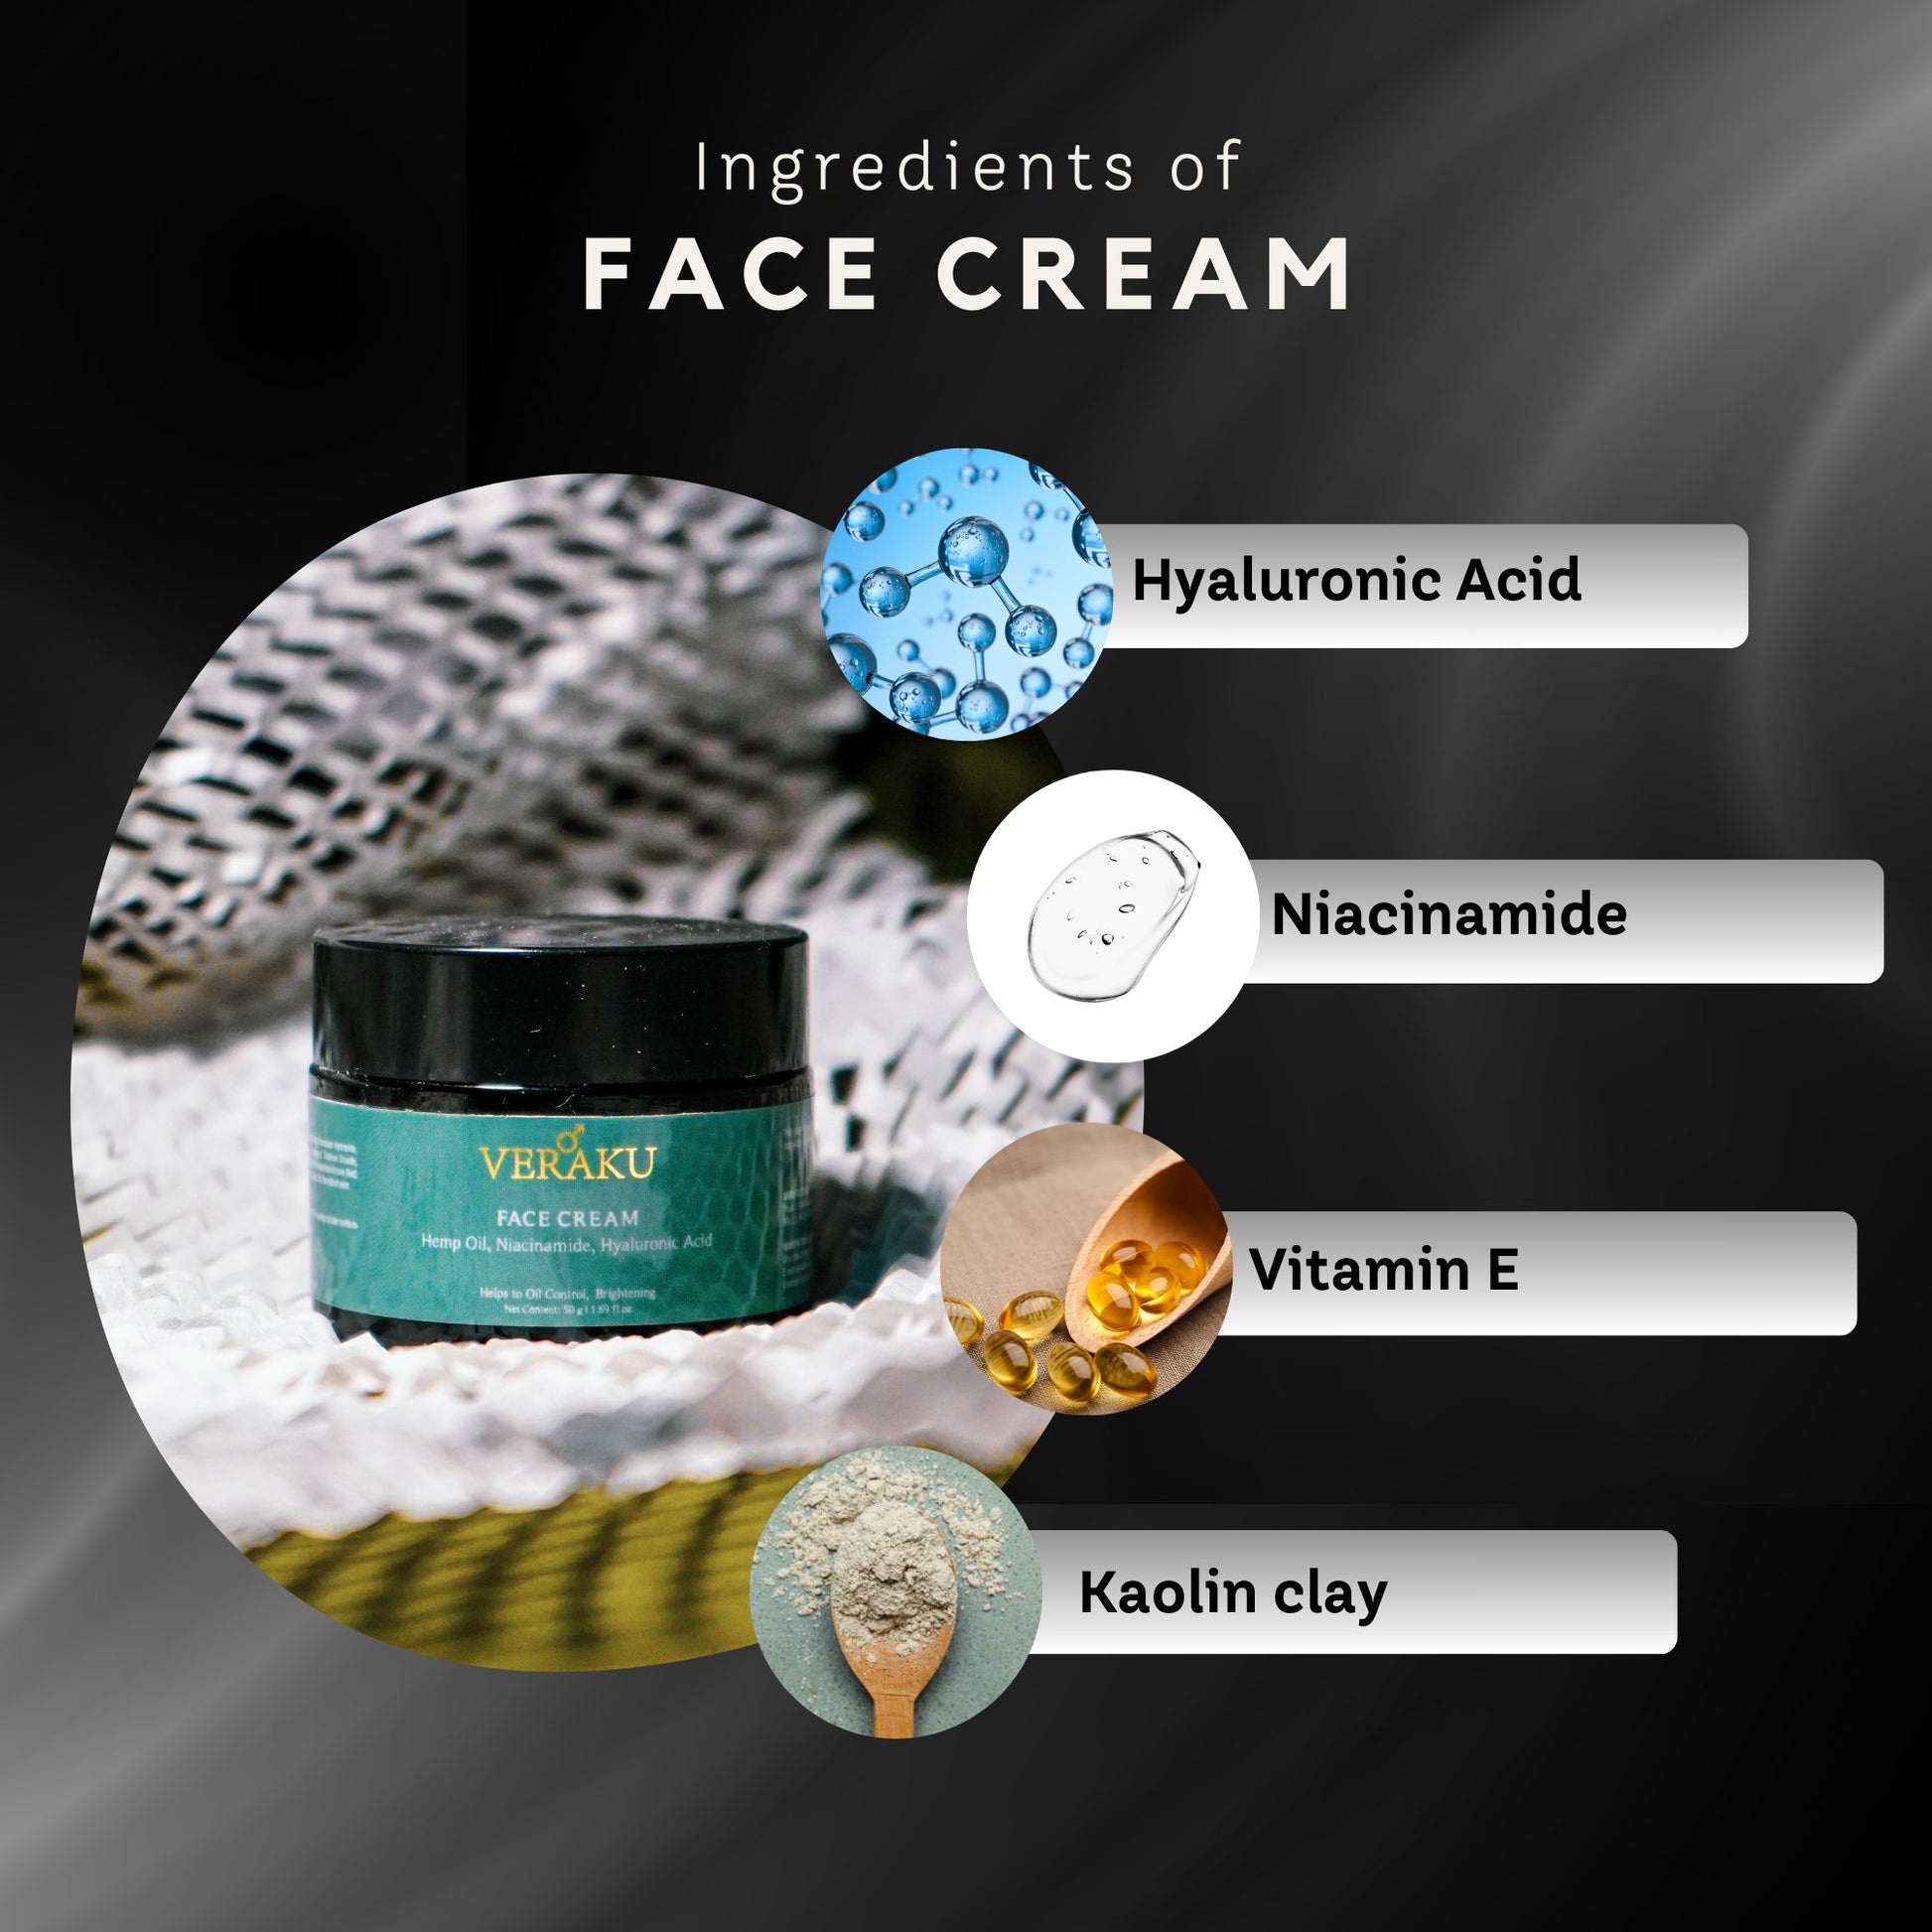 Coffee Face Scrub | Charcoal Face Mask | Oil Control Face Cream | Beard Comb | COMBO PACK | For Men - Veraku